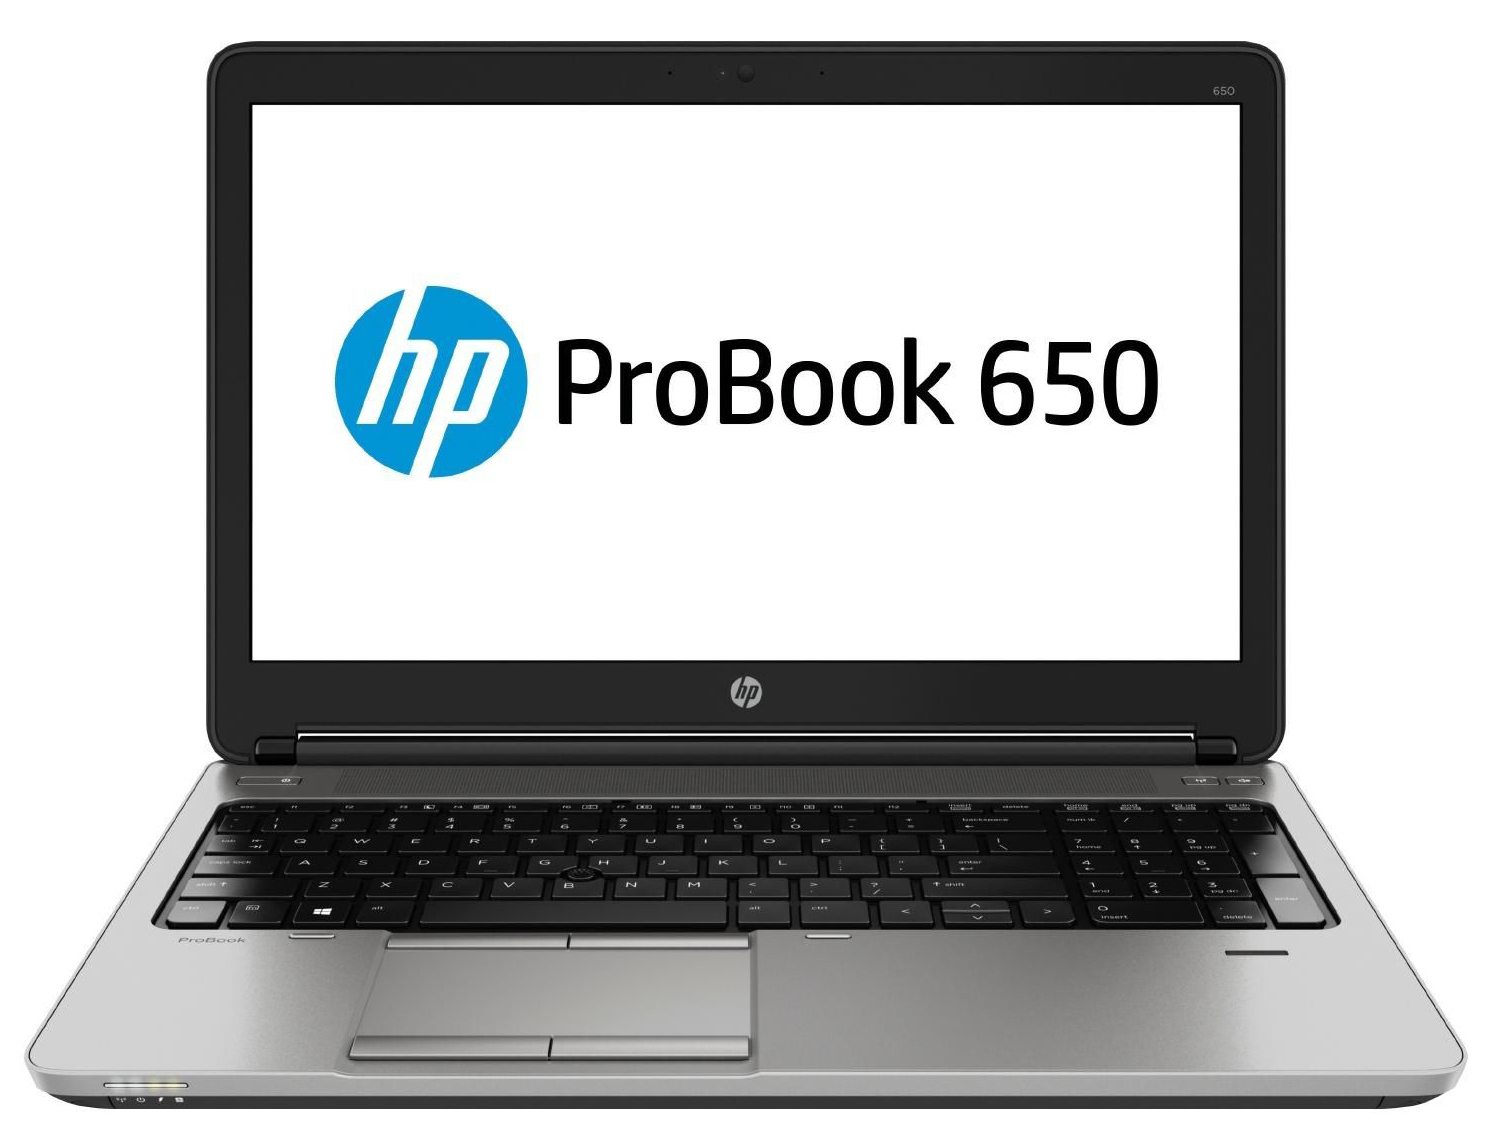 Laptop Second Hand HP ProBook 650 G3, Intel Core i5-7200U 2.50GHz, 8GB DDR4, 256GB SSD, 15.6 Inch Full HD, DVD-RW, Webcam, Grad B